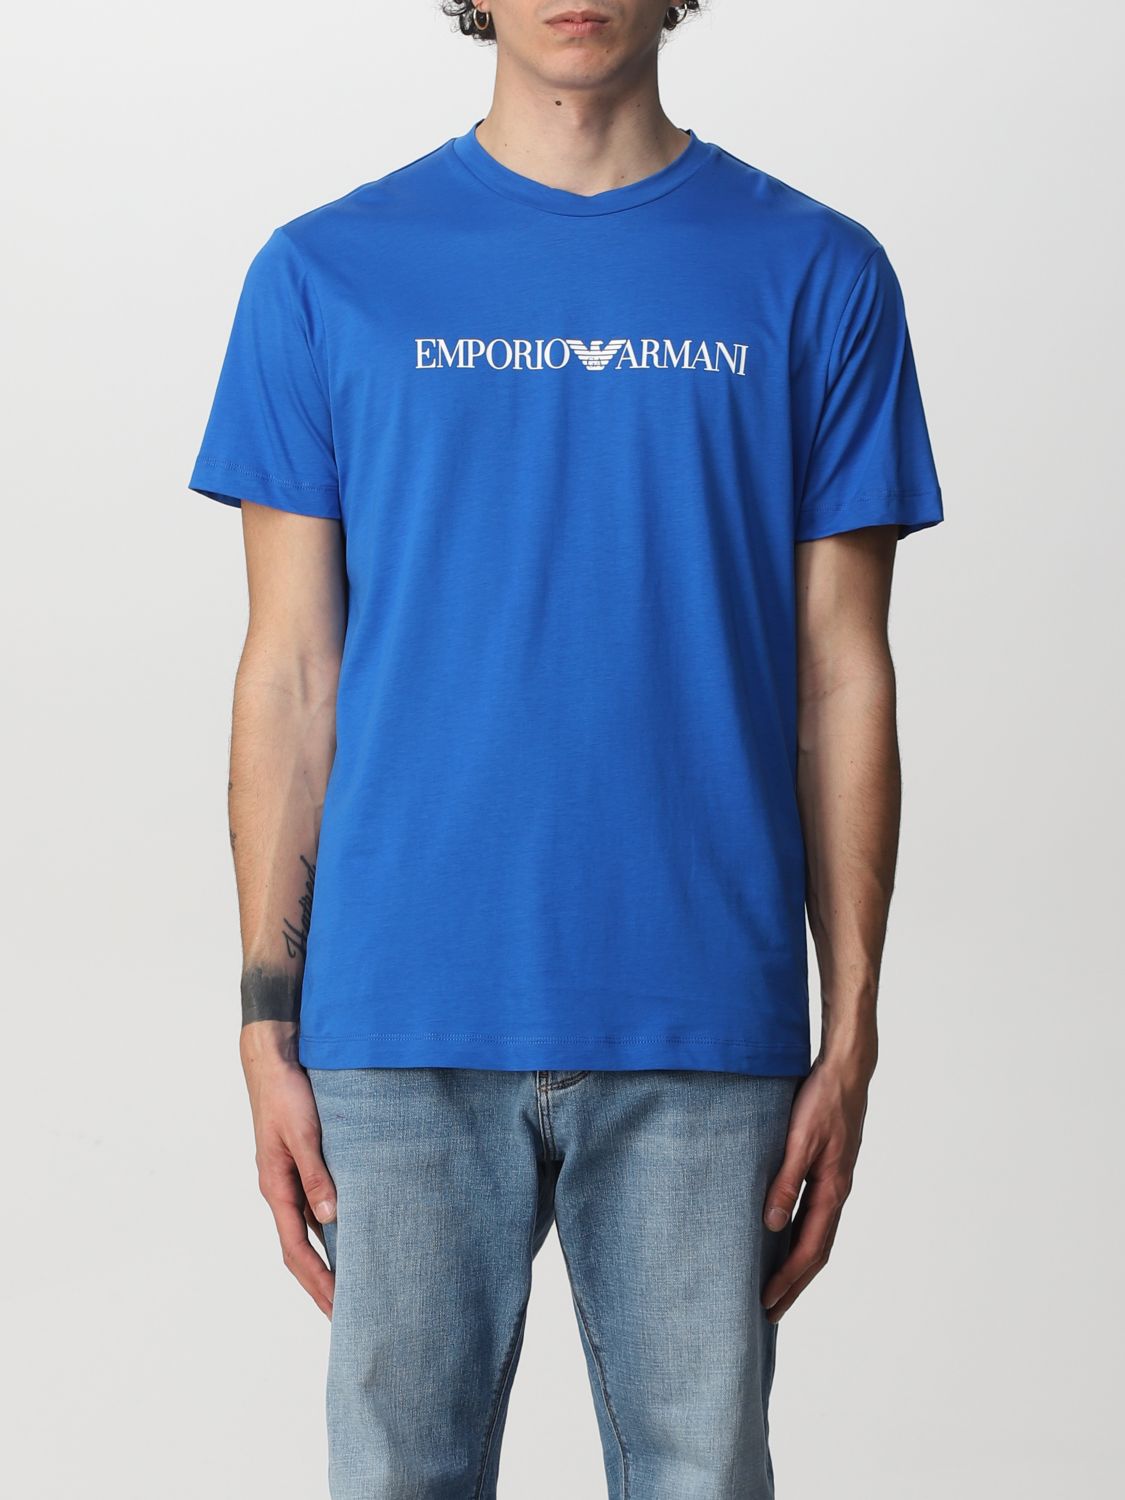 Emporio Armani Cotton Tshirt In Blue 1